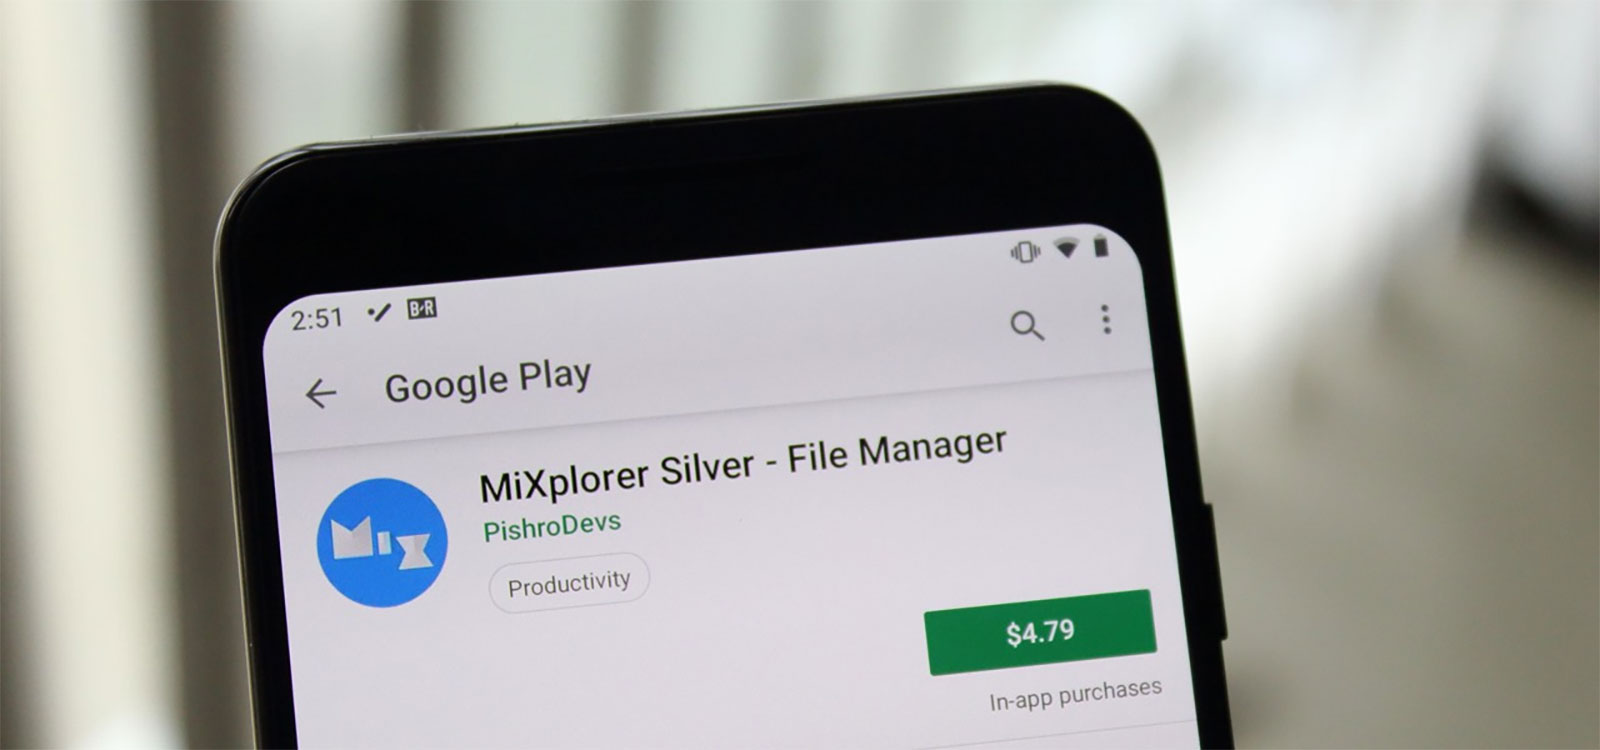 mixplorer silver file manager mod apk